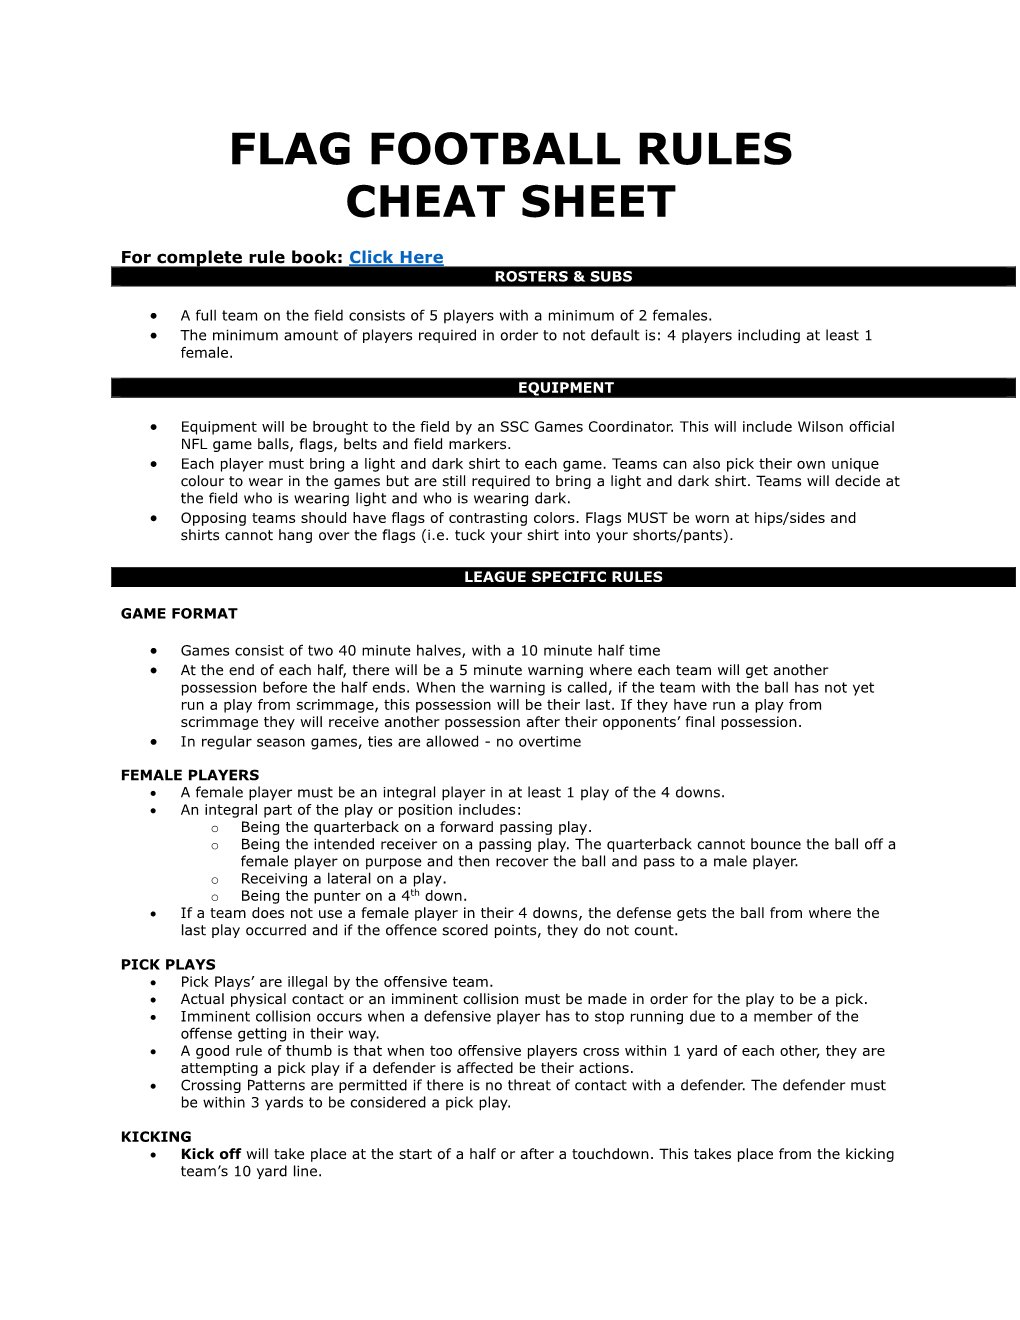 Flag Football Rules Cheat Sheet DocsLib